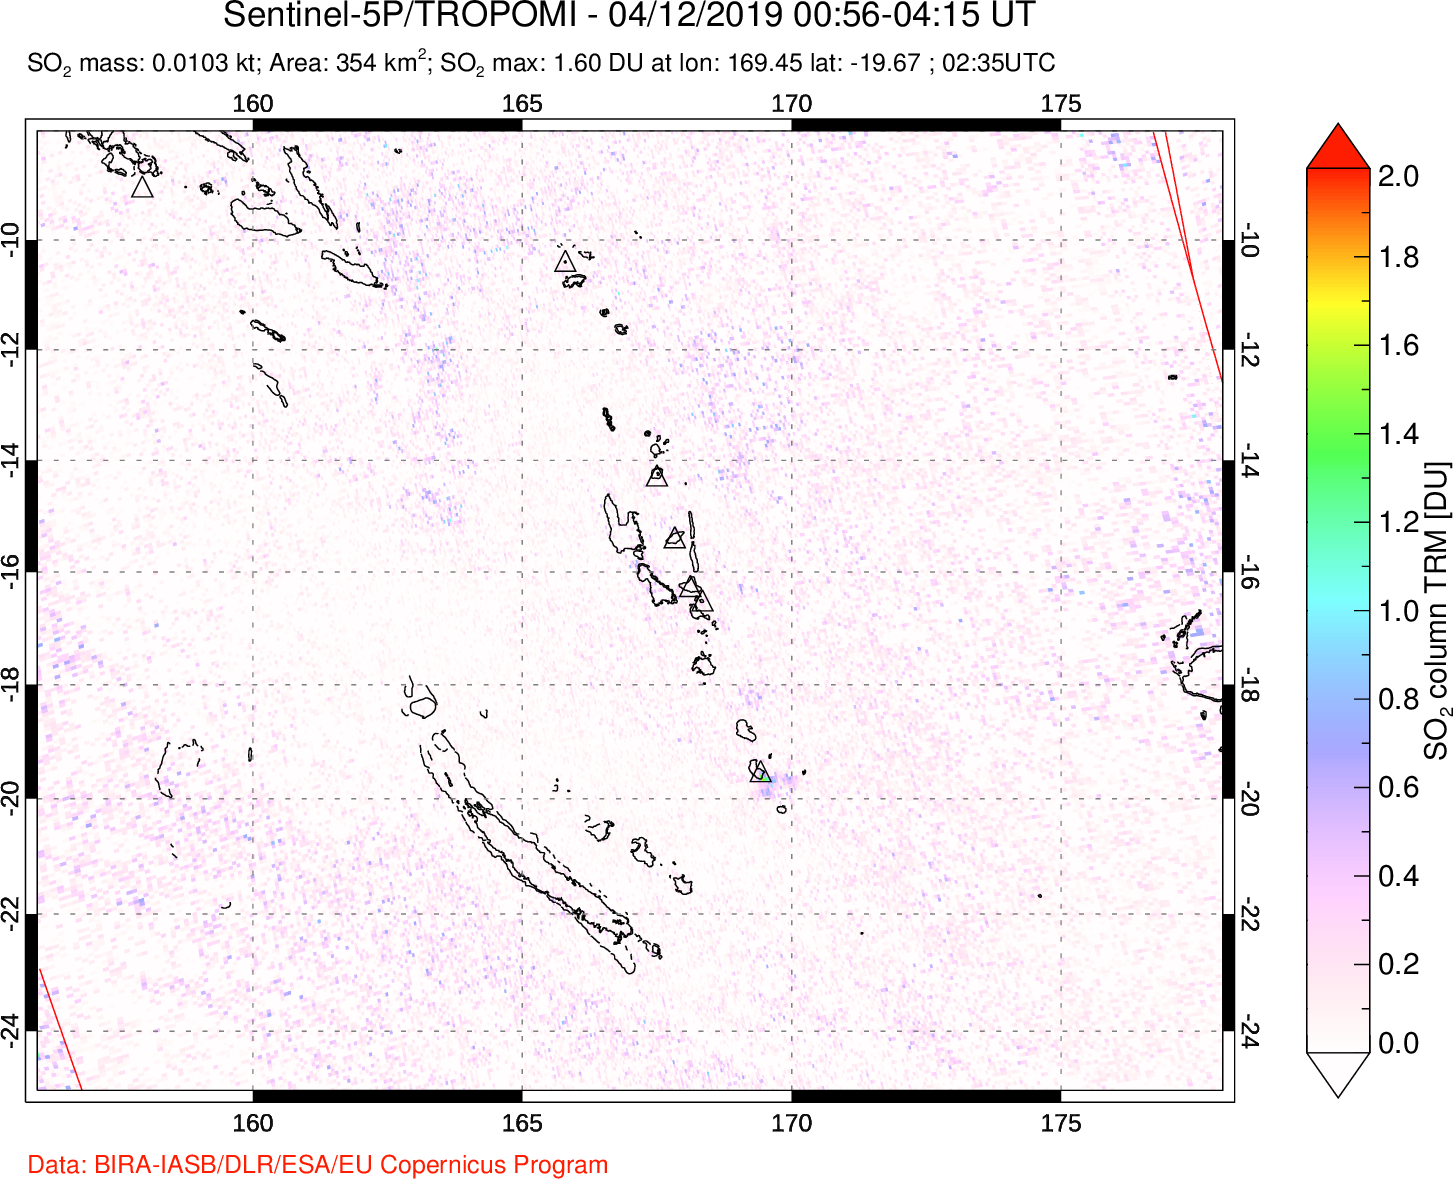 A sulfur dioxide image over Vanuatu, South Pacific on Apr 12, 2019.